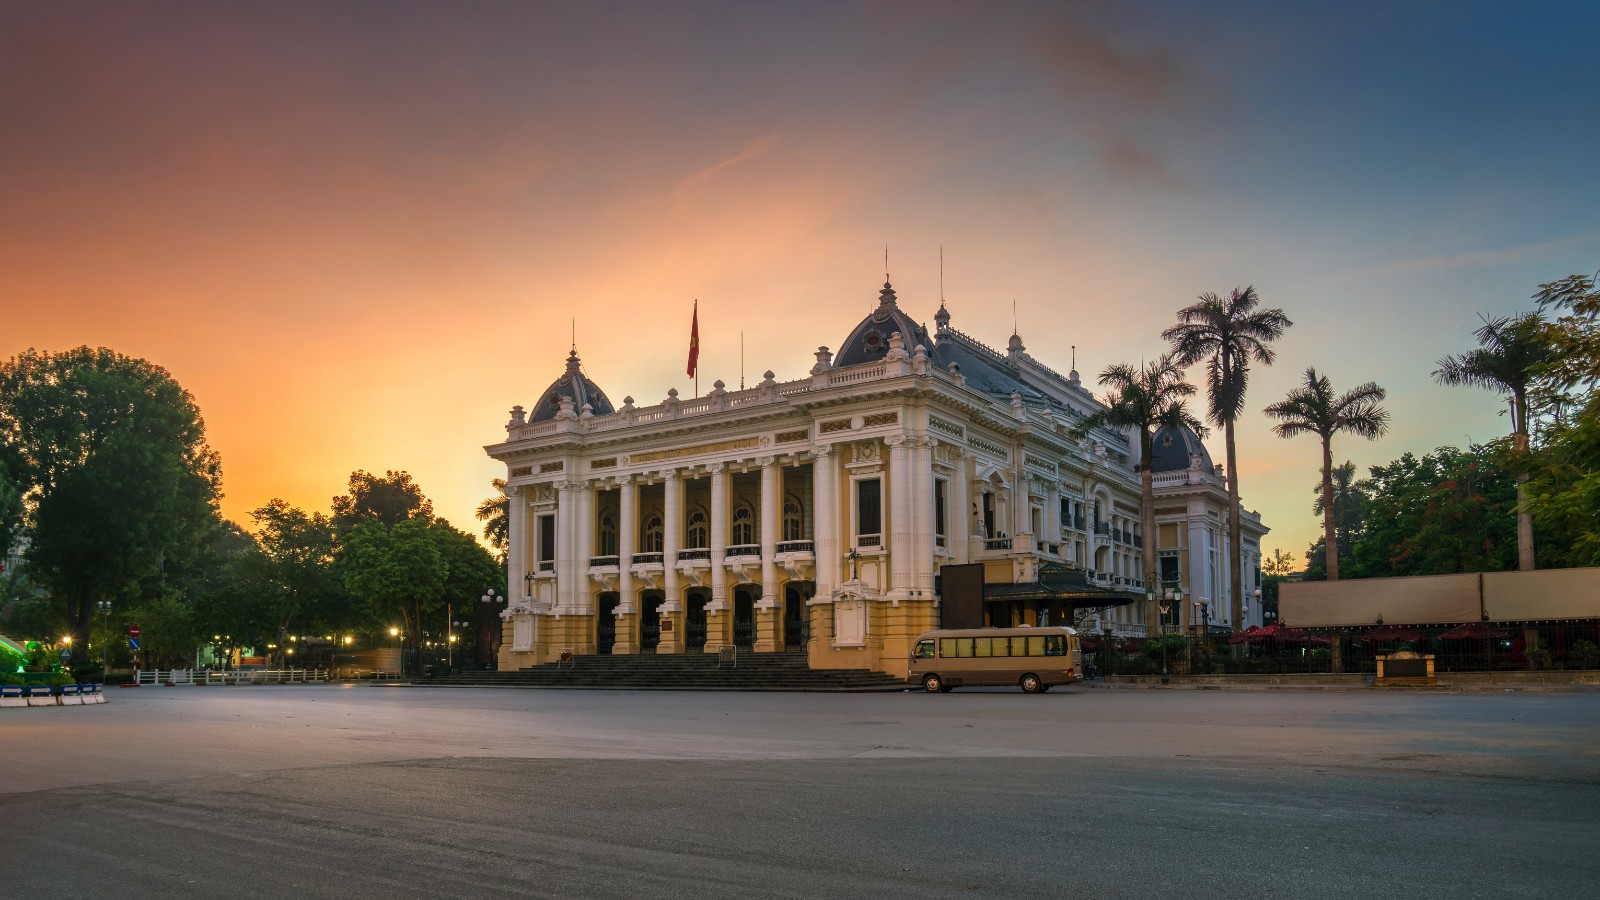 The Historic Hanoi Opera House